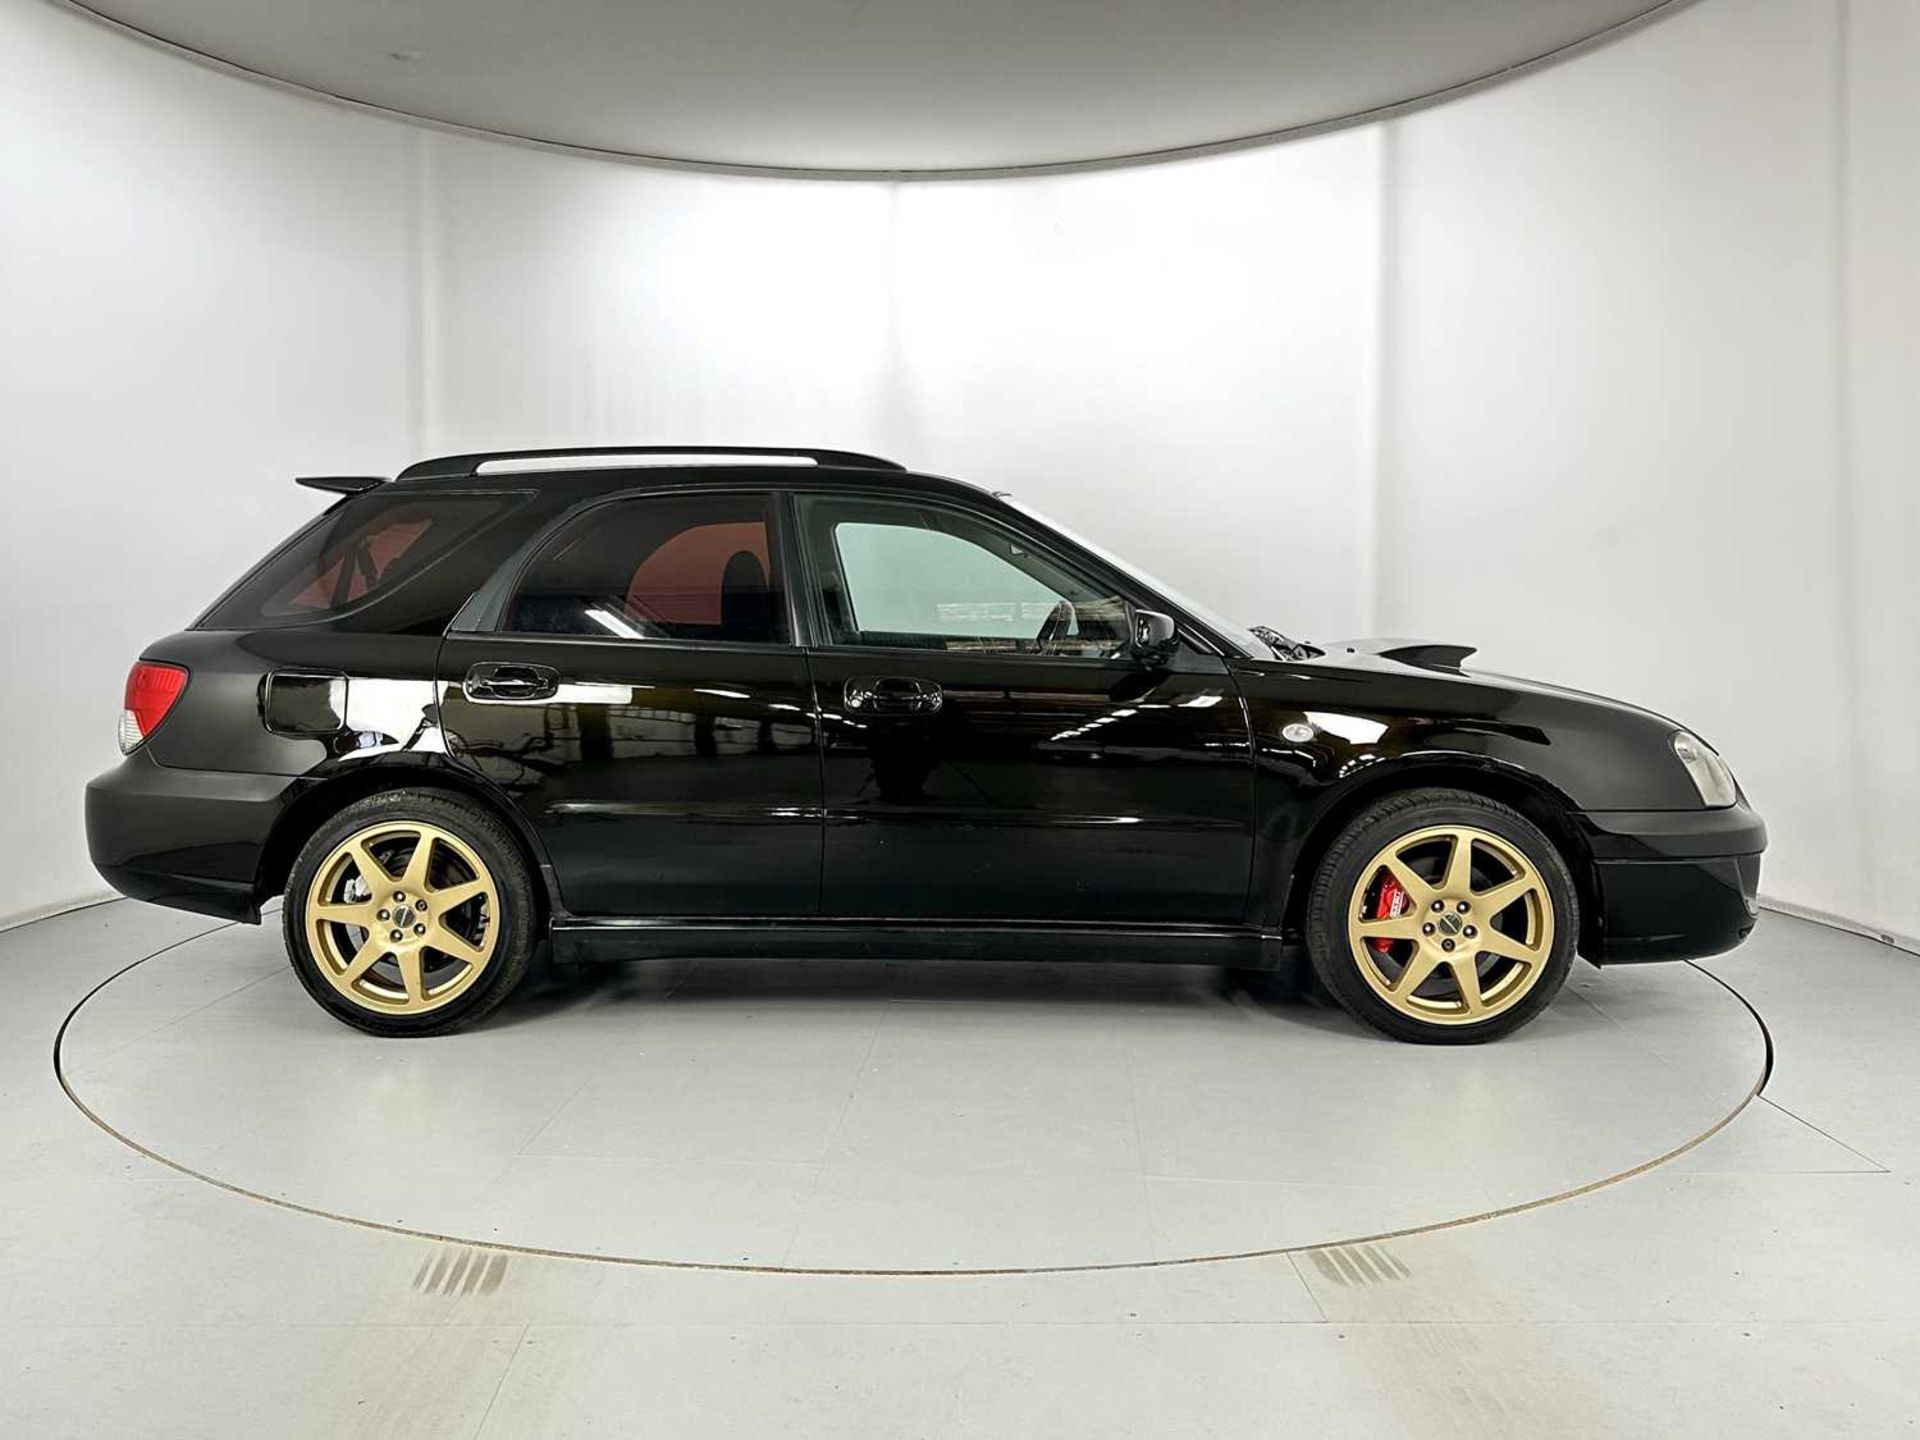 2004 Subaru Impreza WRX - Image 11 of 35